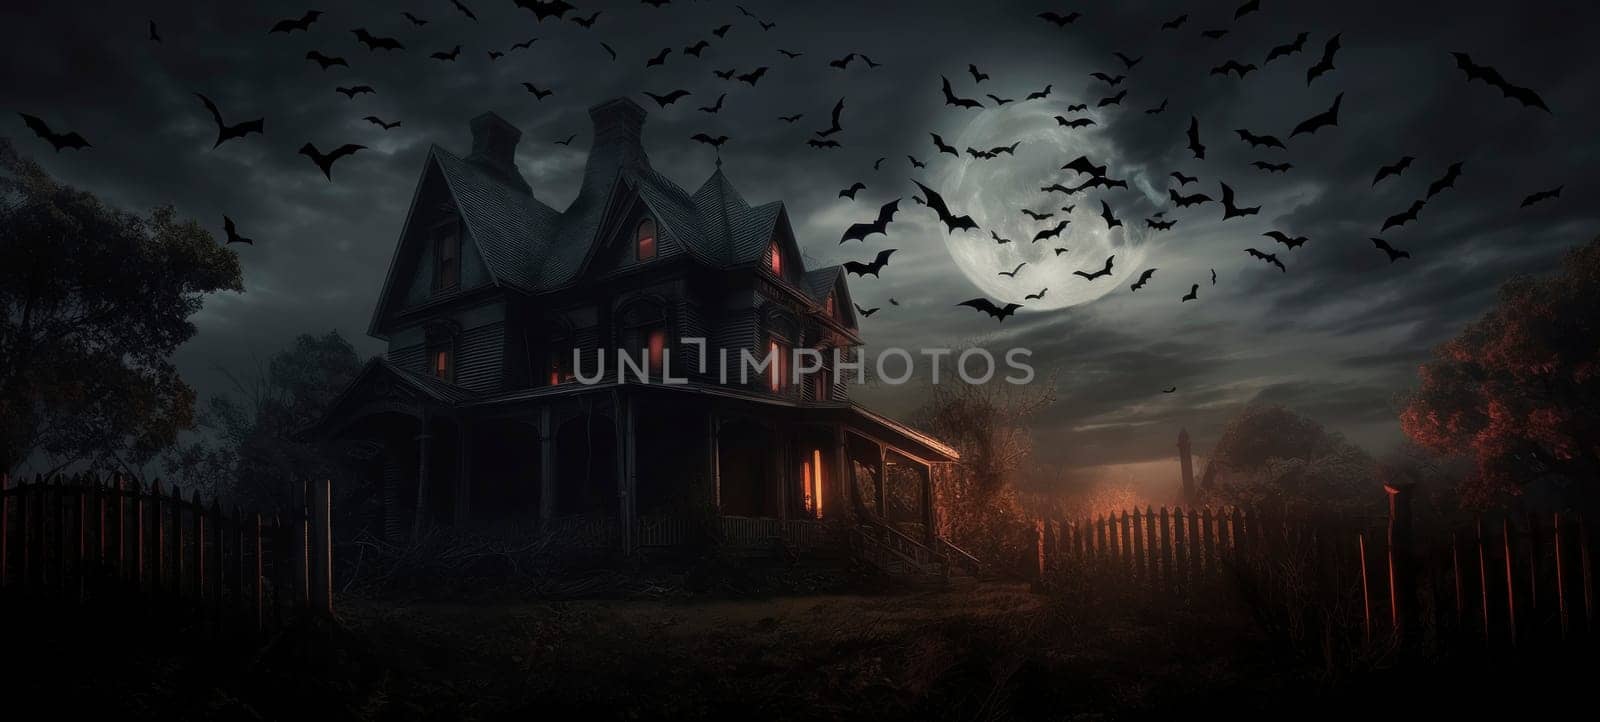 Bats swarm over a desolate house against a moonlit sky